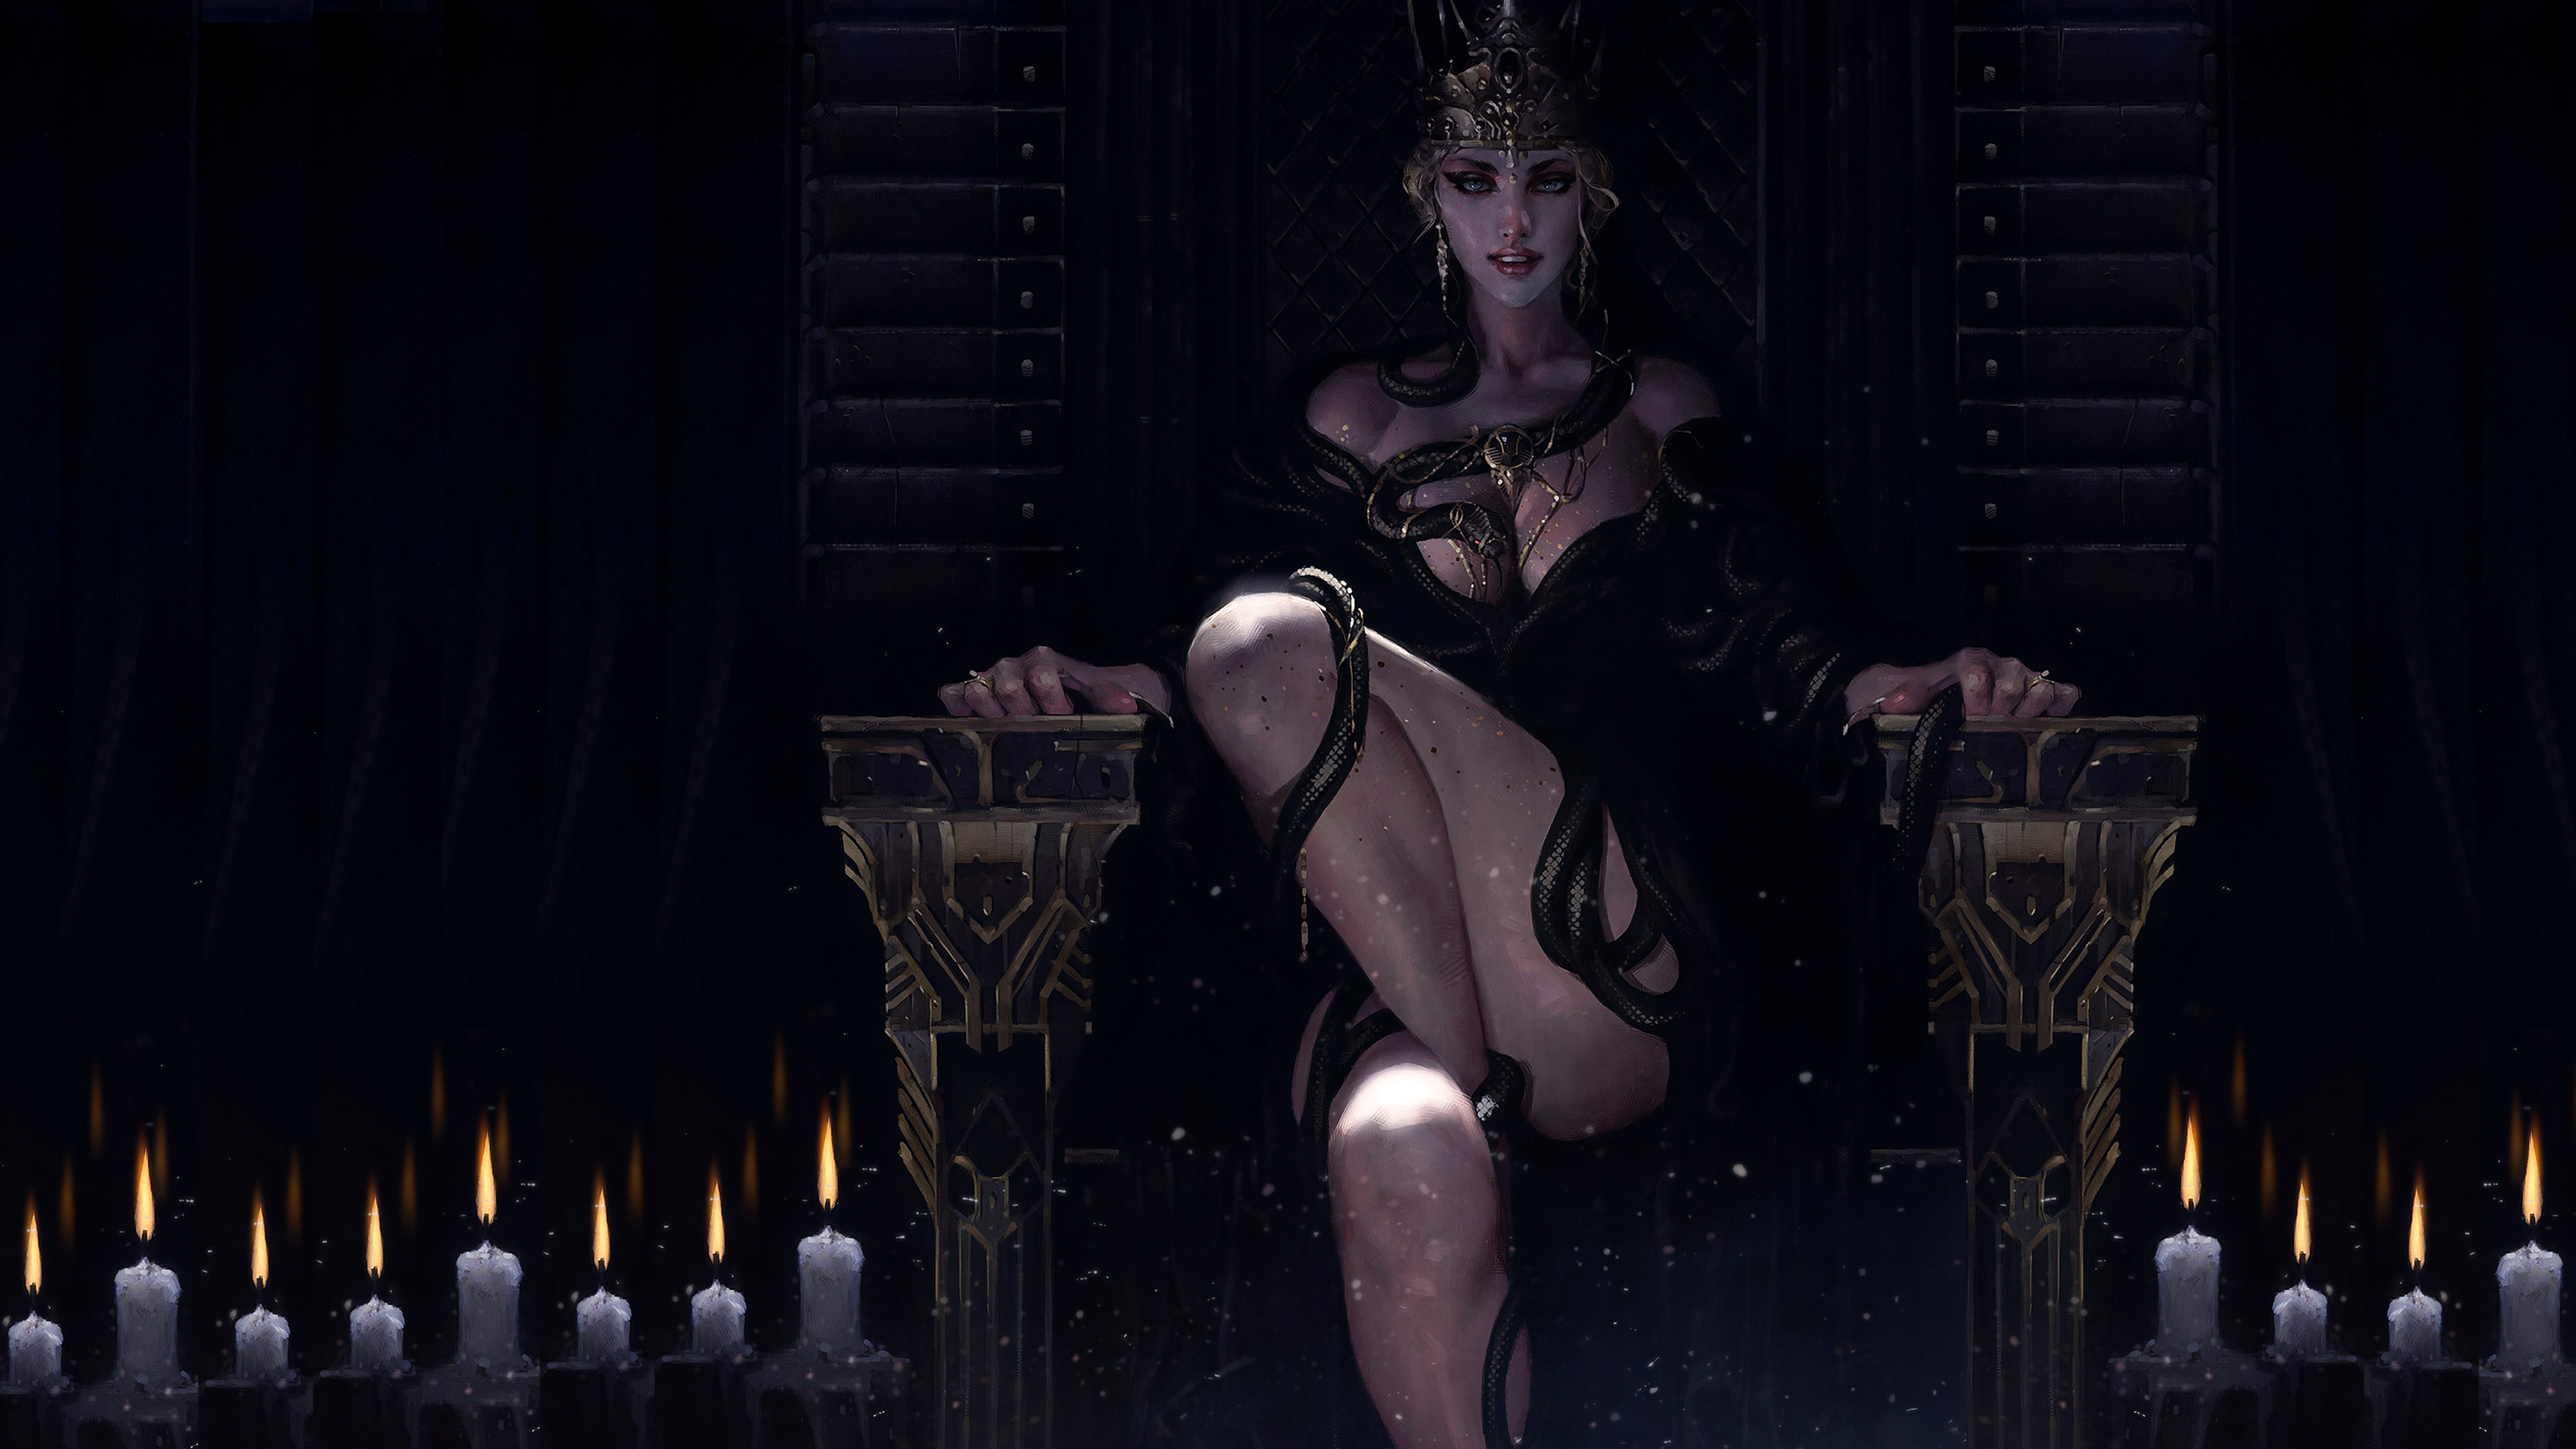 General 3840x2160 fantasy art snake cleavage Archeage digital art women candles throne crown